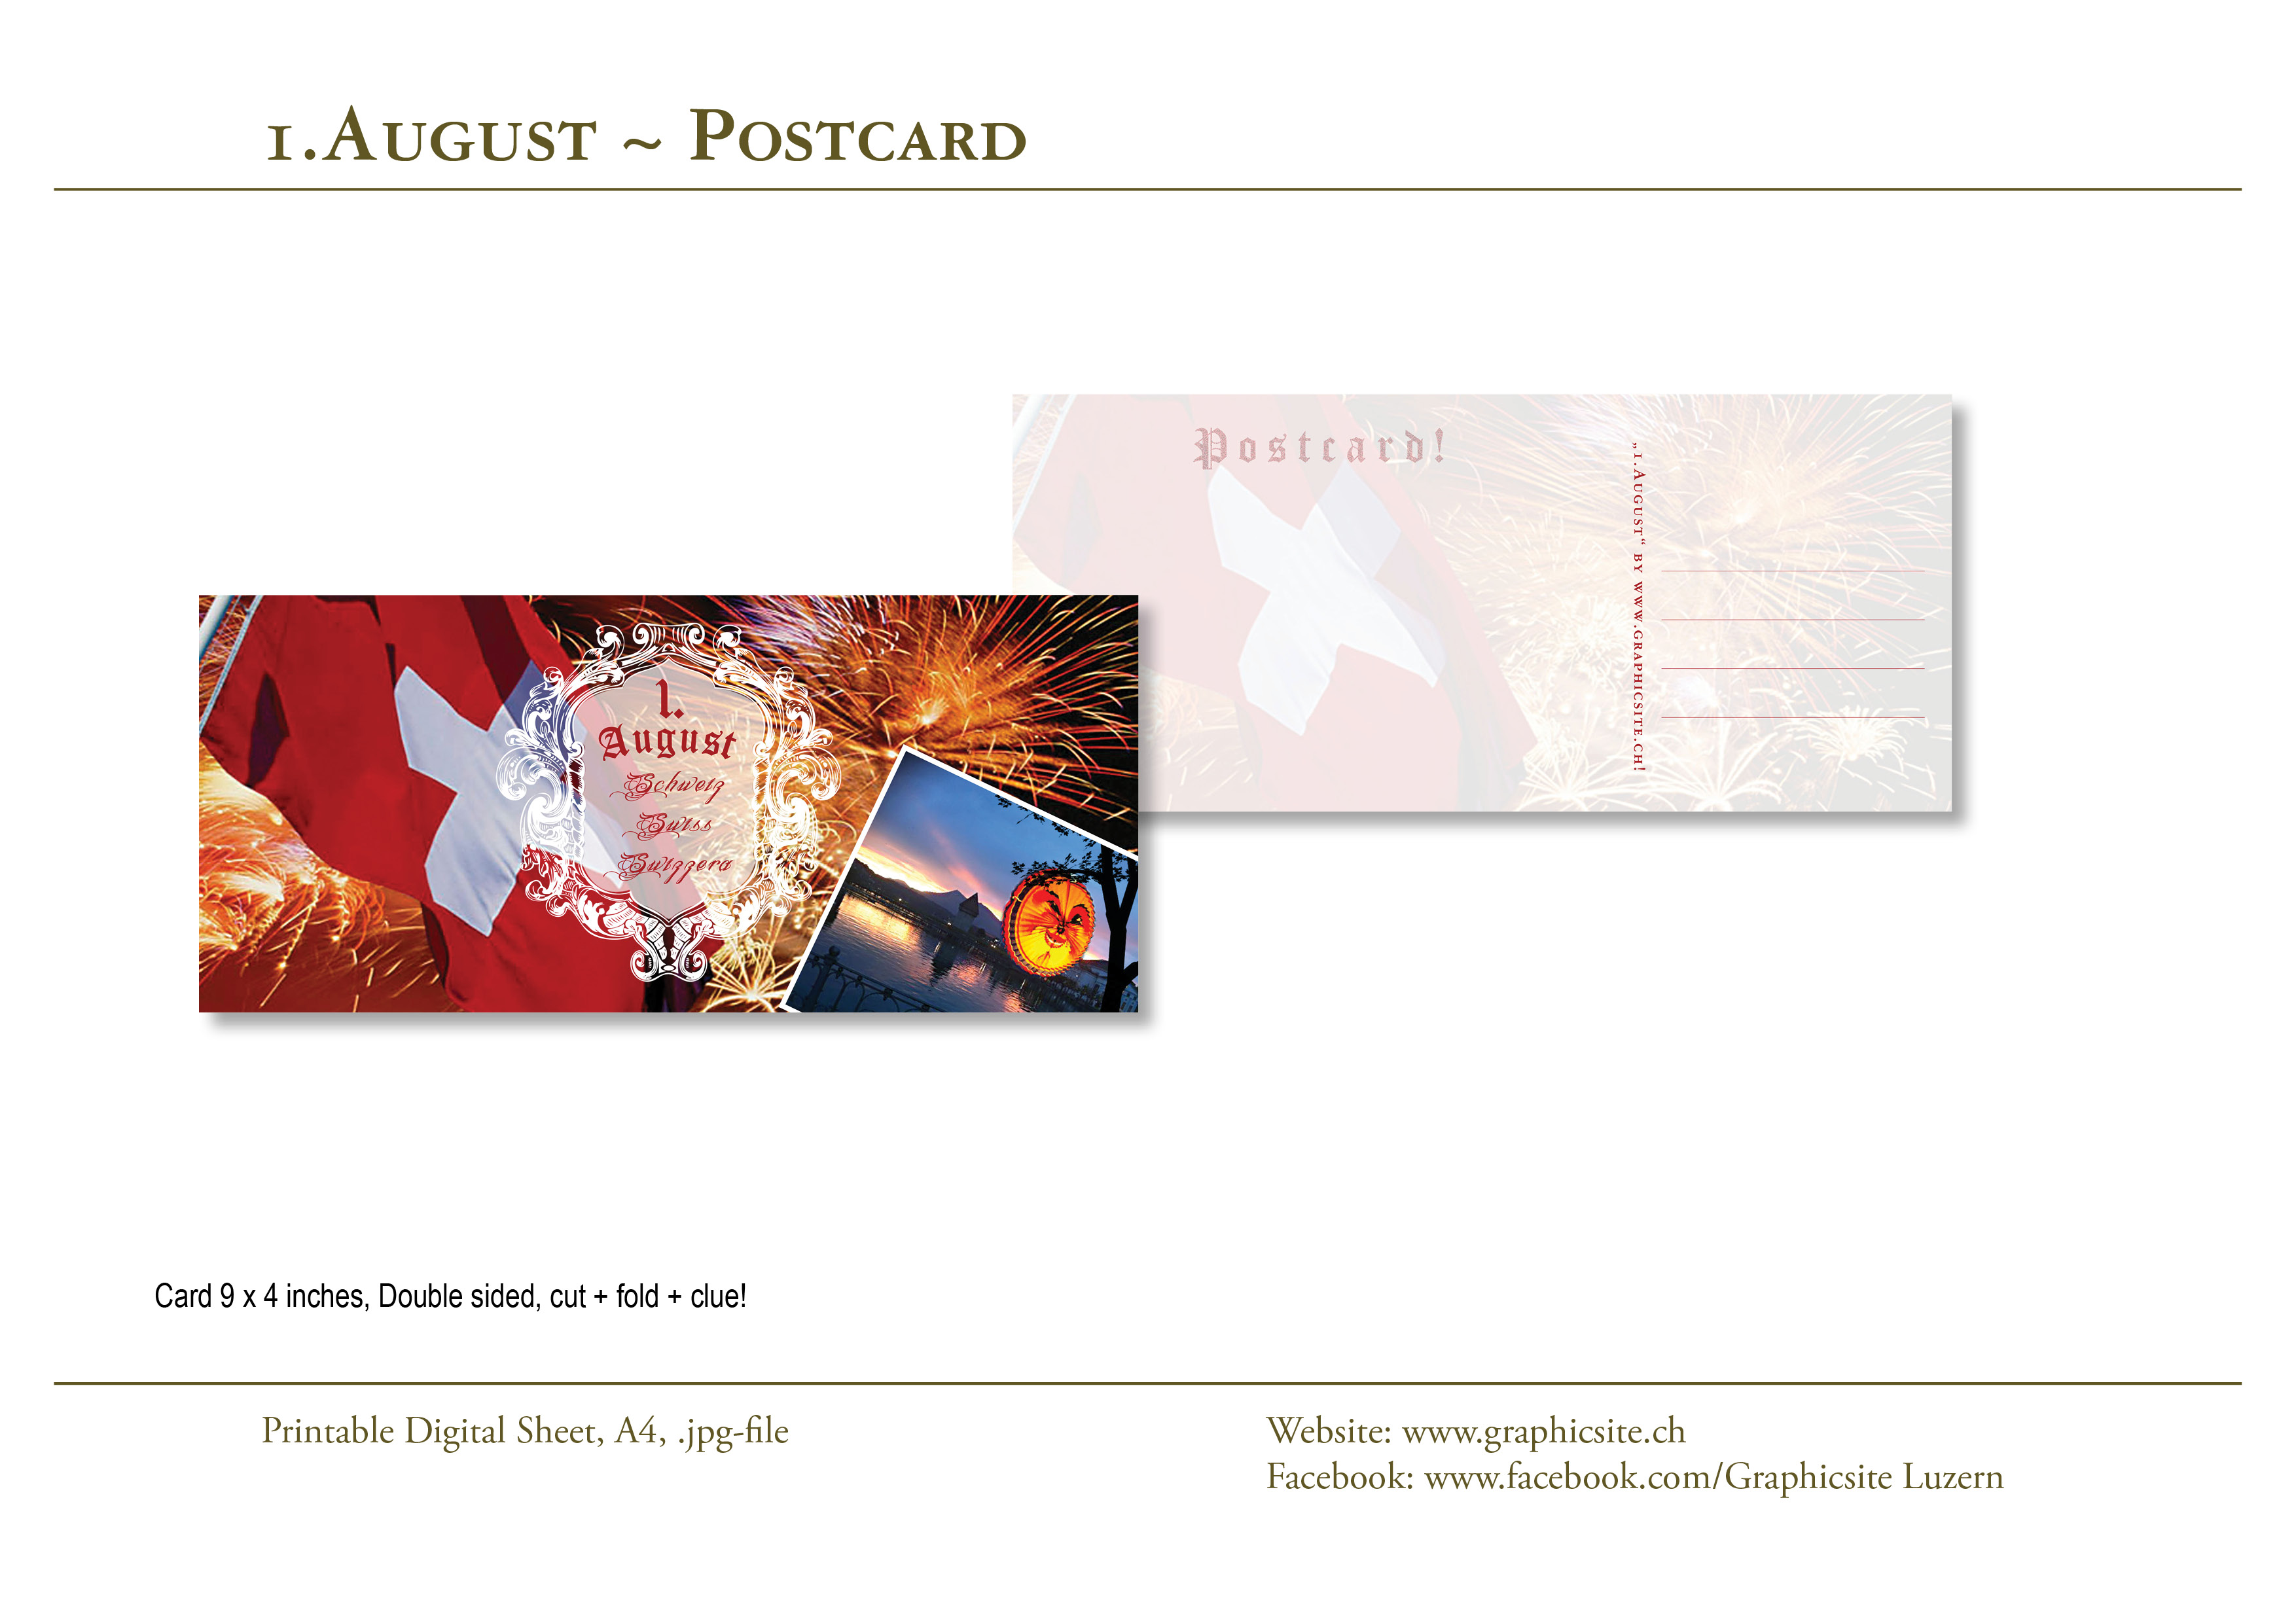 Printable Digital Sheets - 9x4 Cards - August 1st - Switzerland #switzerland, #luzern, #festivities, #fireworks, 